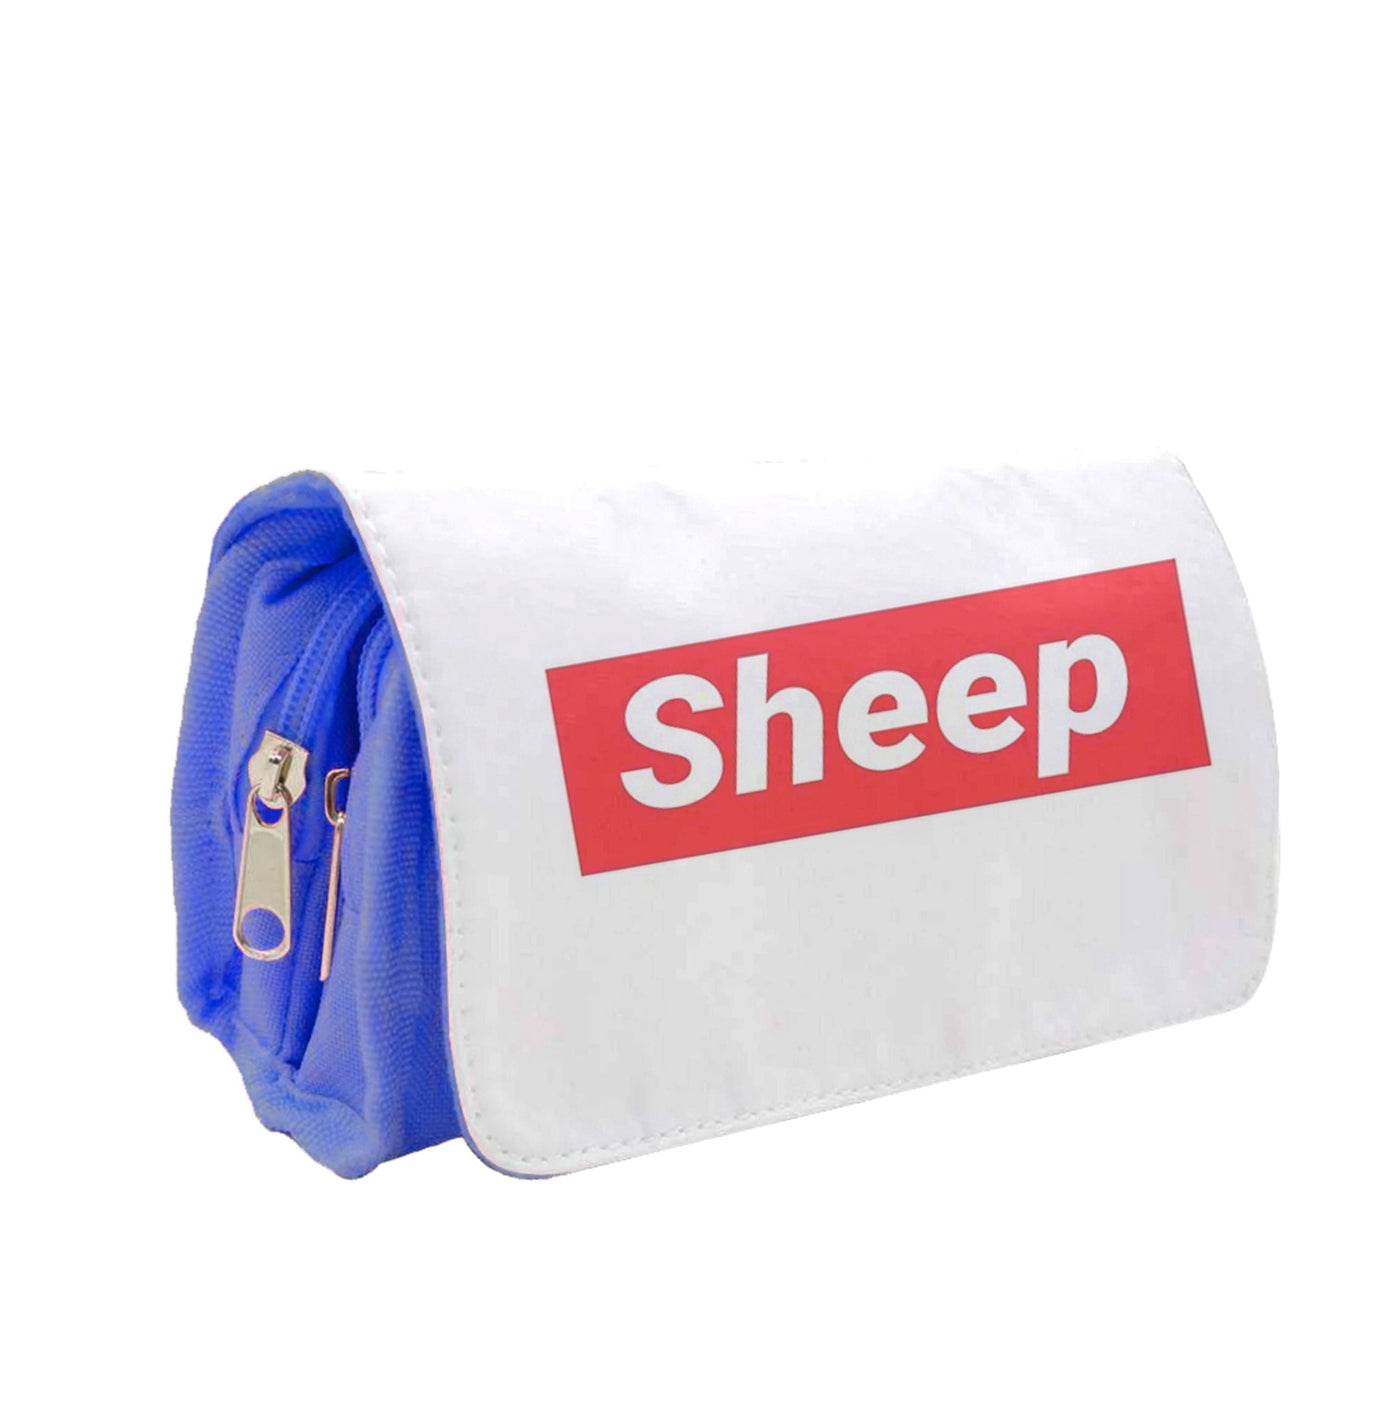 Sheep - Supreme Pencil Case